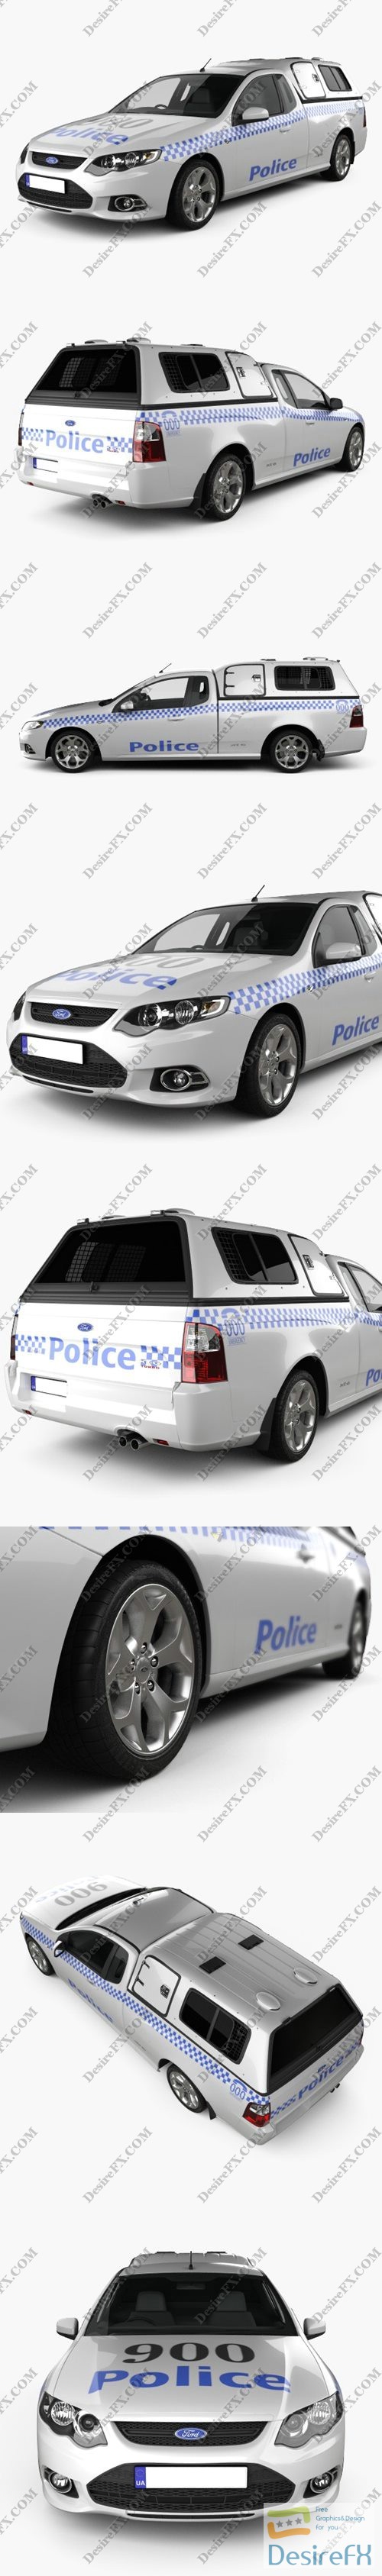 Ford Falcon UTE XR6 Police 2011 3D Model